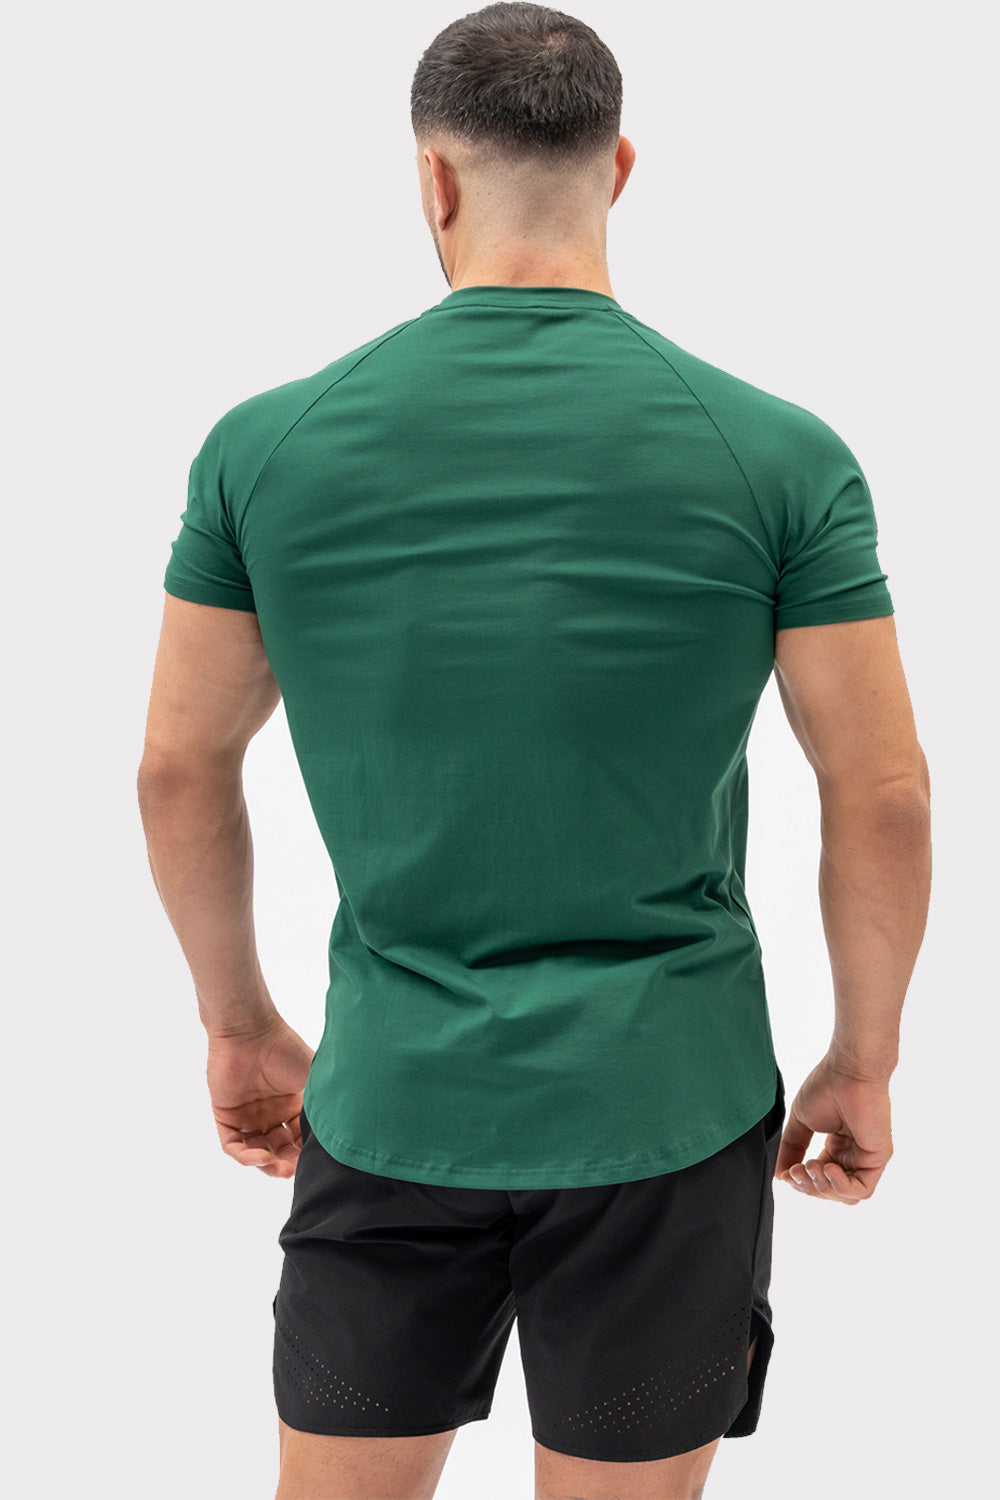  A CODE T-Shirt - Verde Escuro